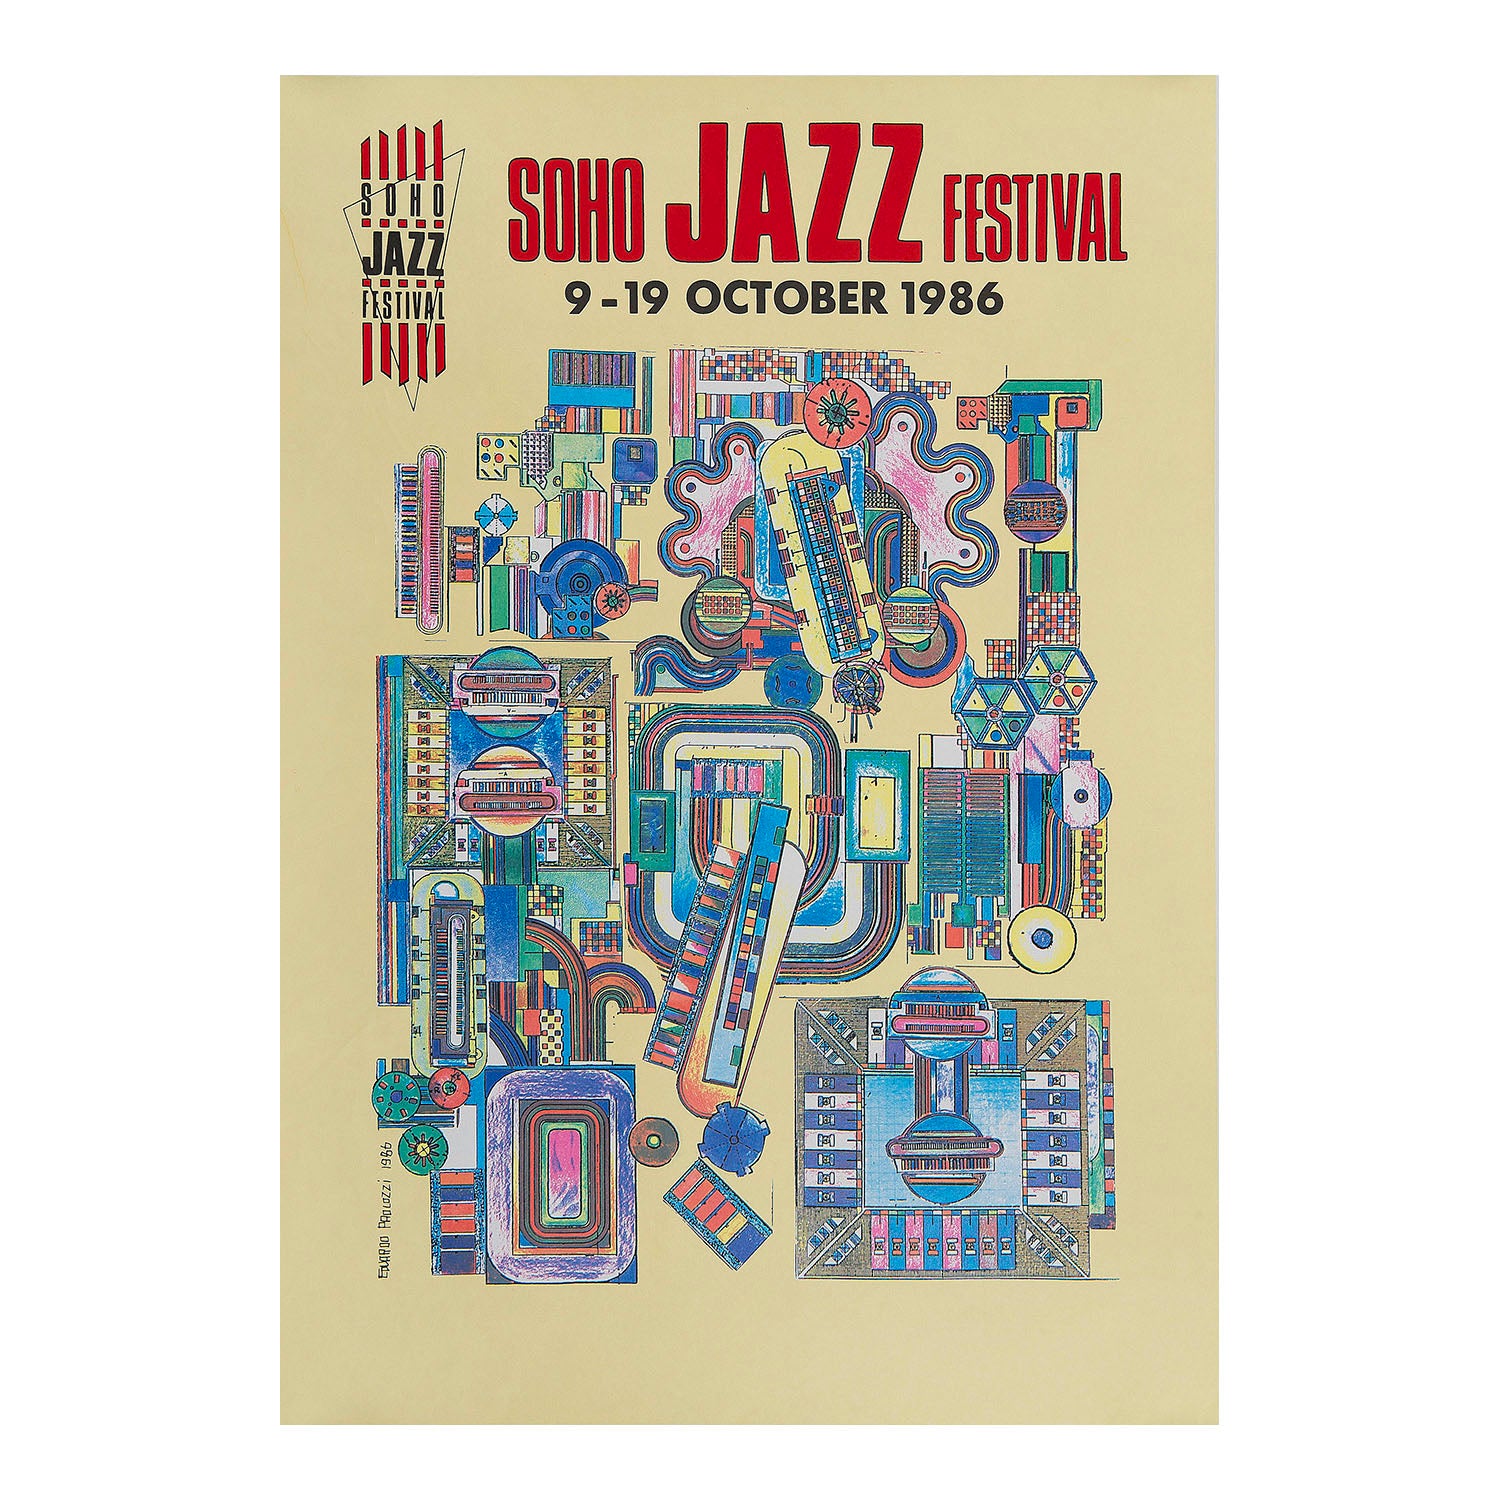 Soho Jazz Festival, 1986